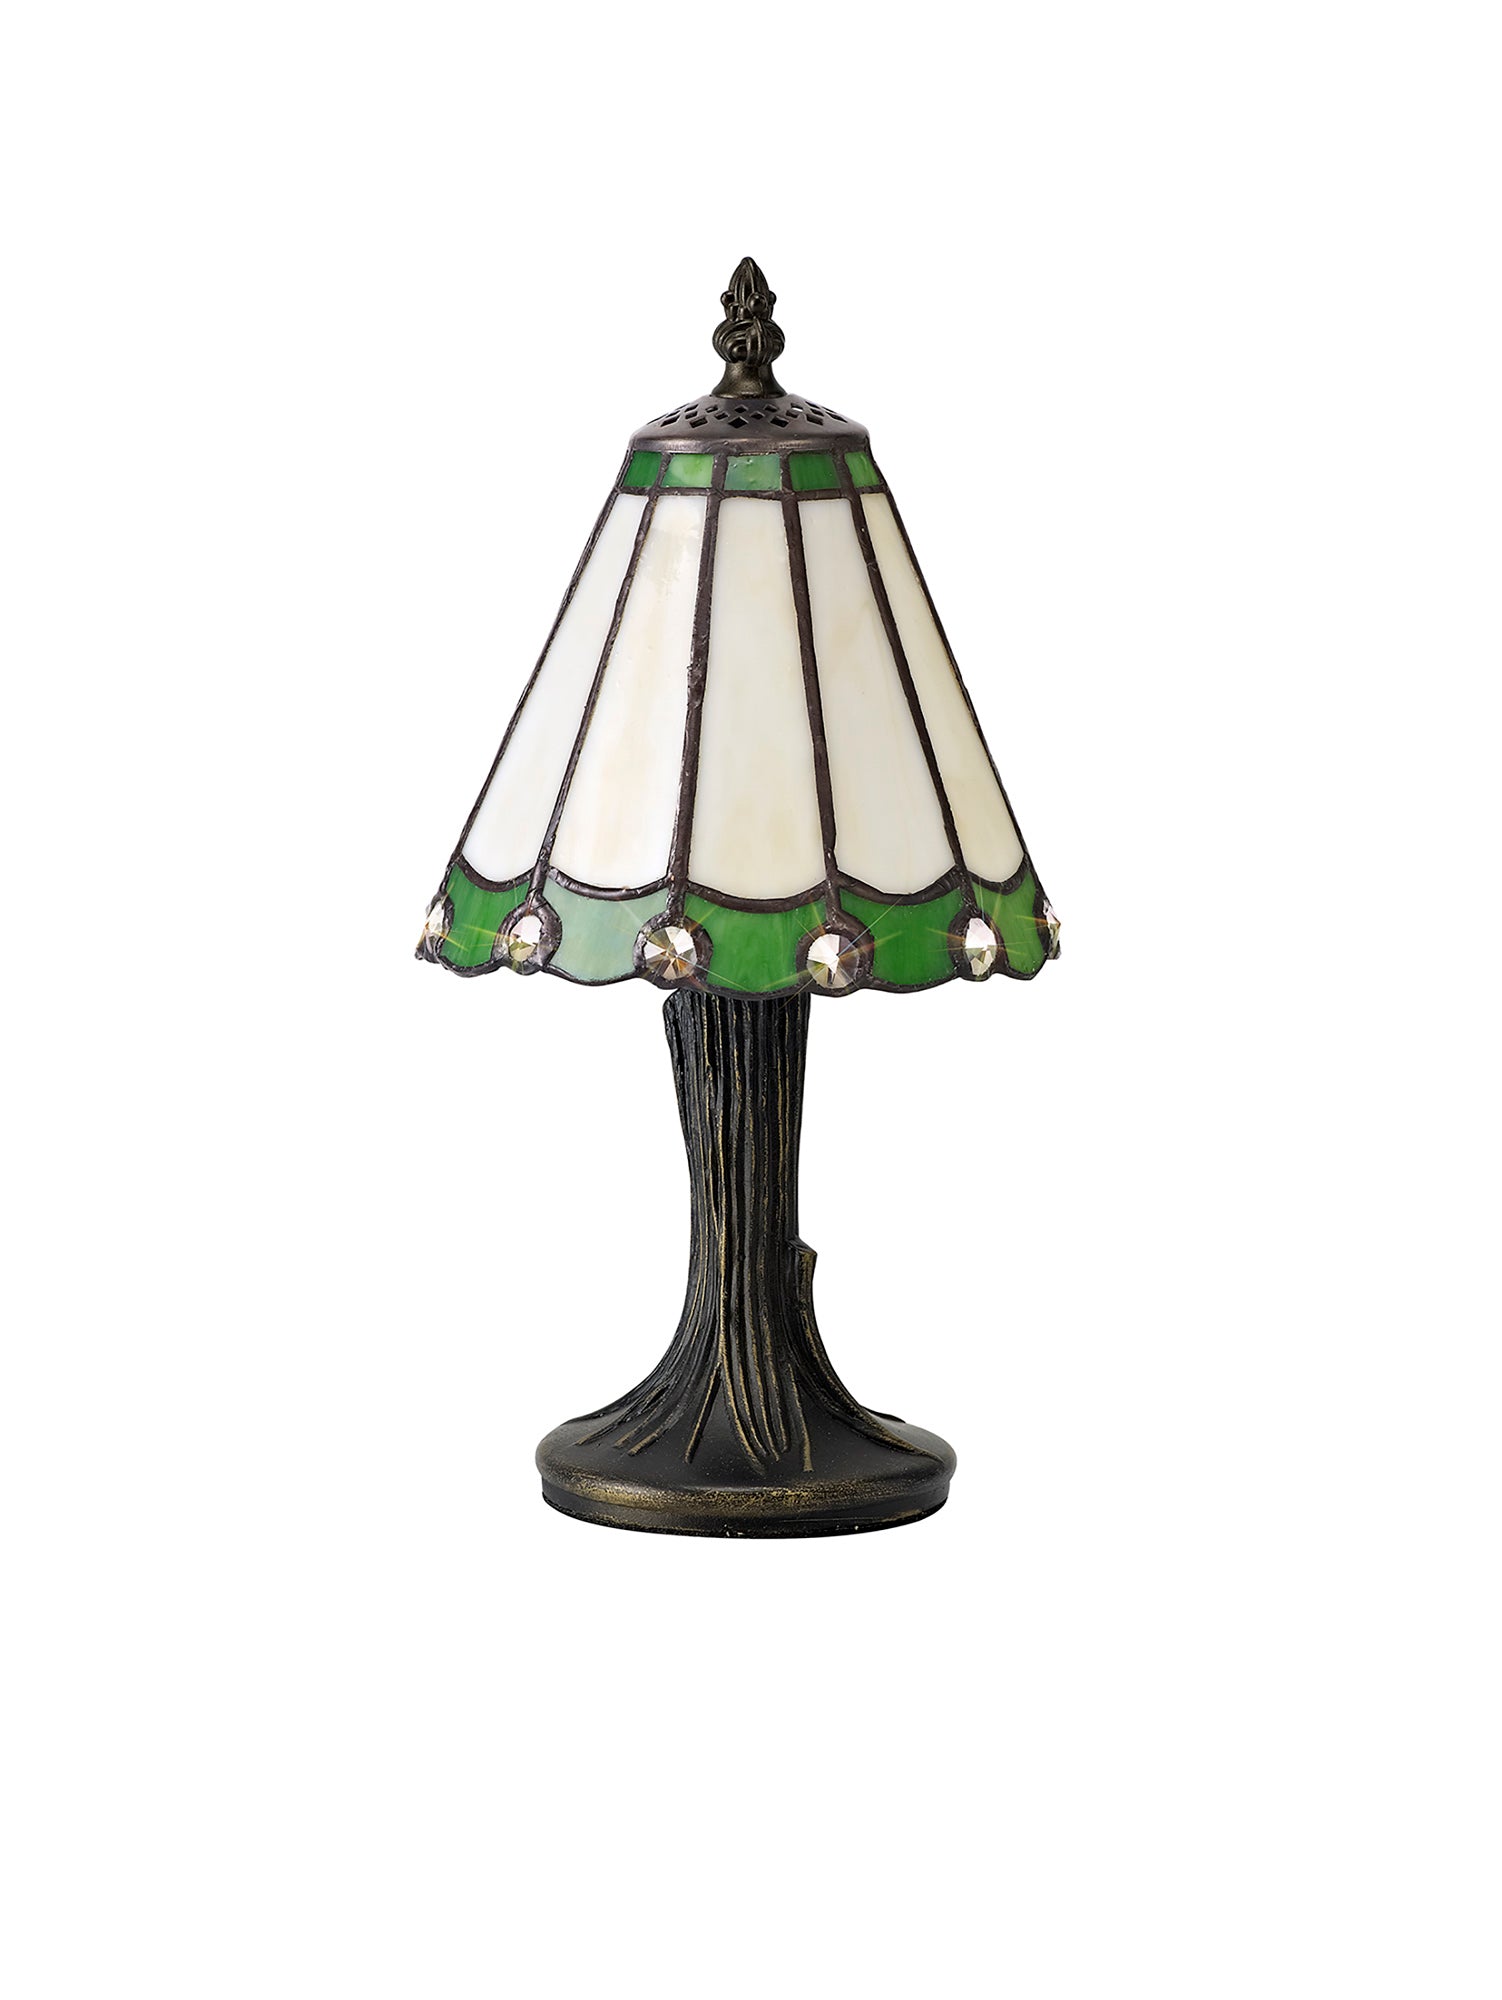 Umbrella Tiffany Table Lamp, 1 x E14, Crealm/Green/Clear Crystal Shade